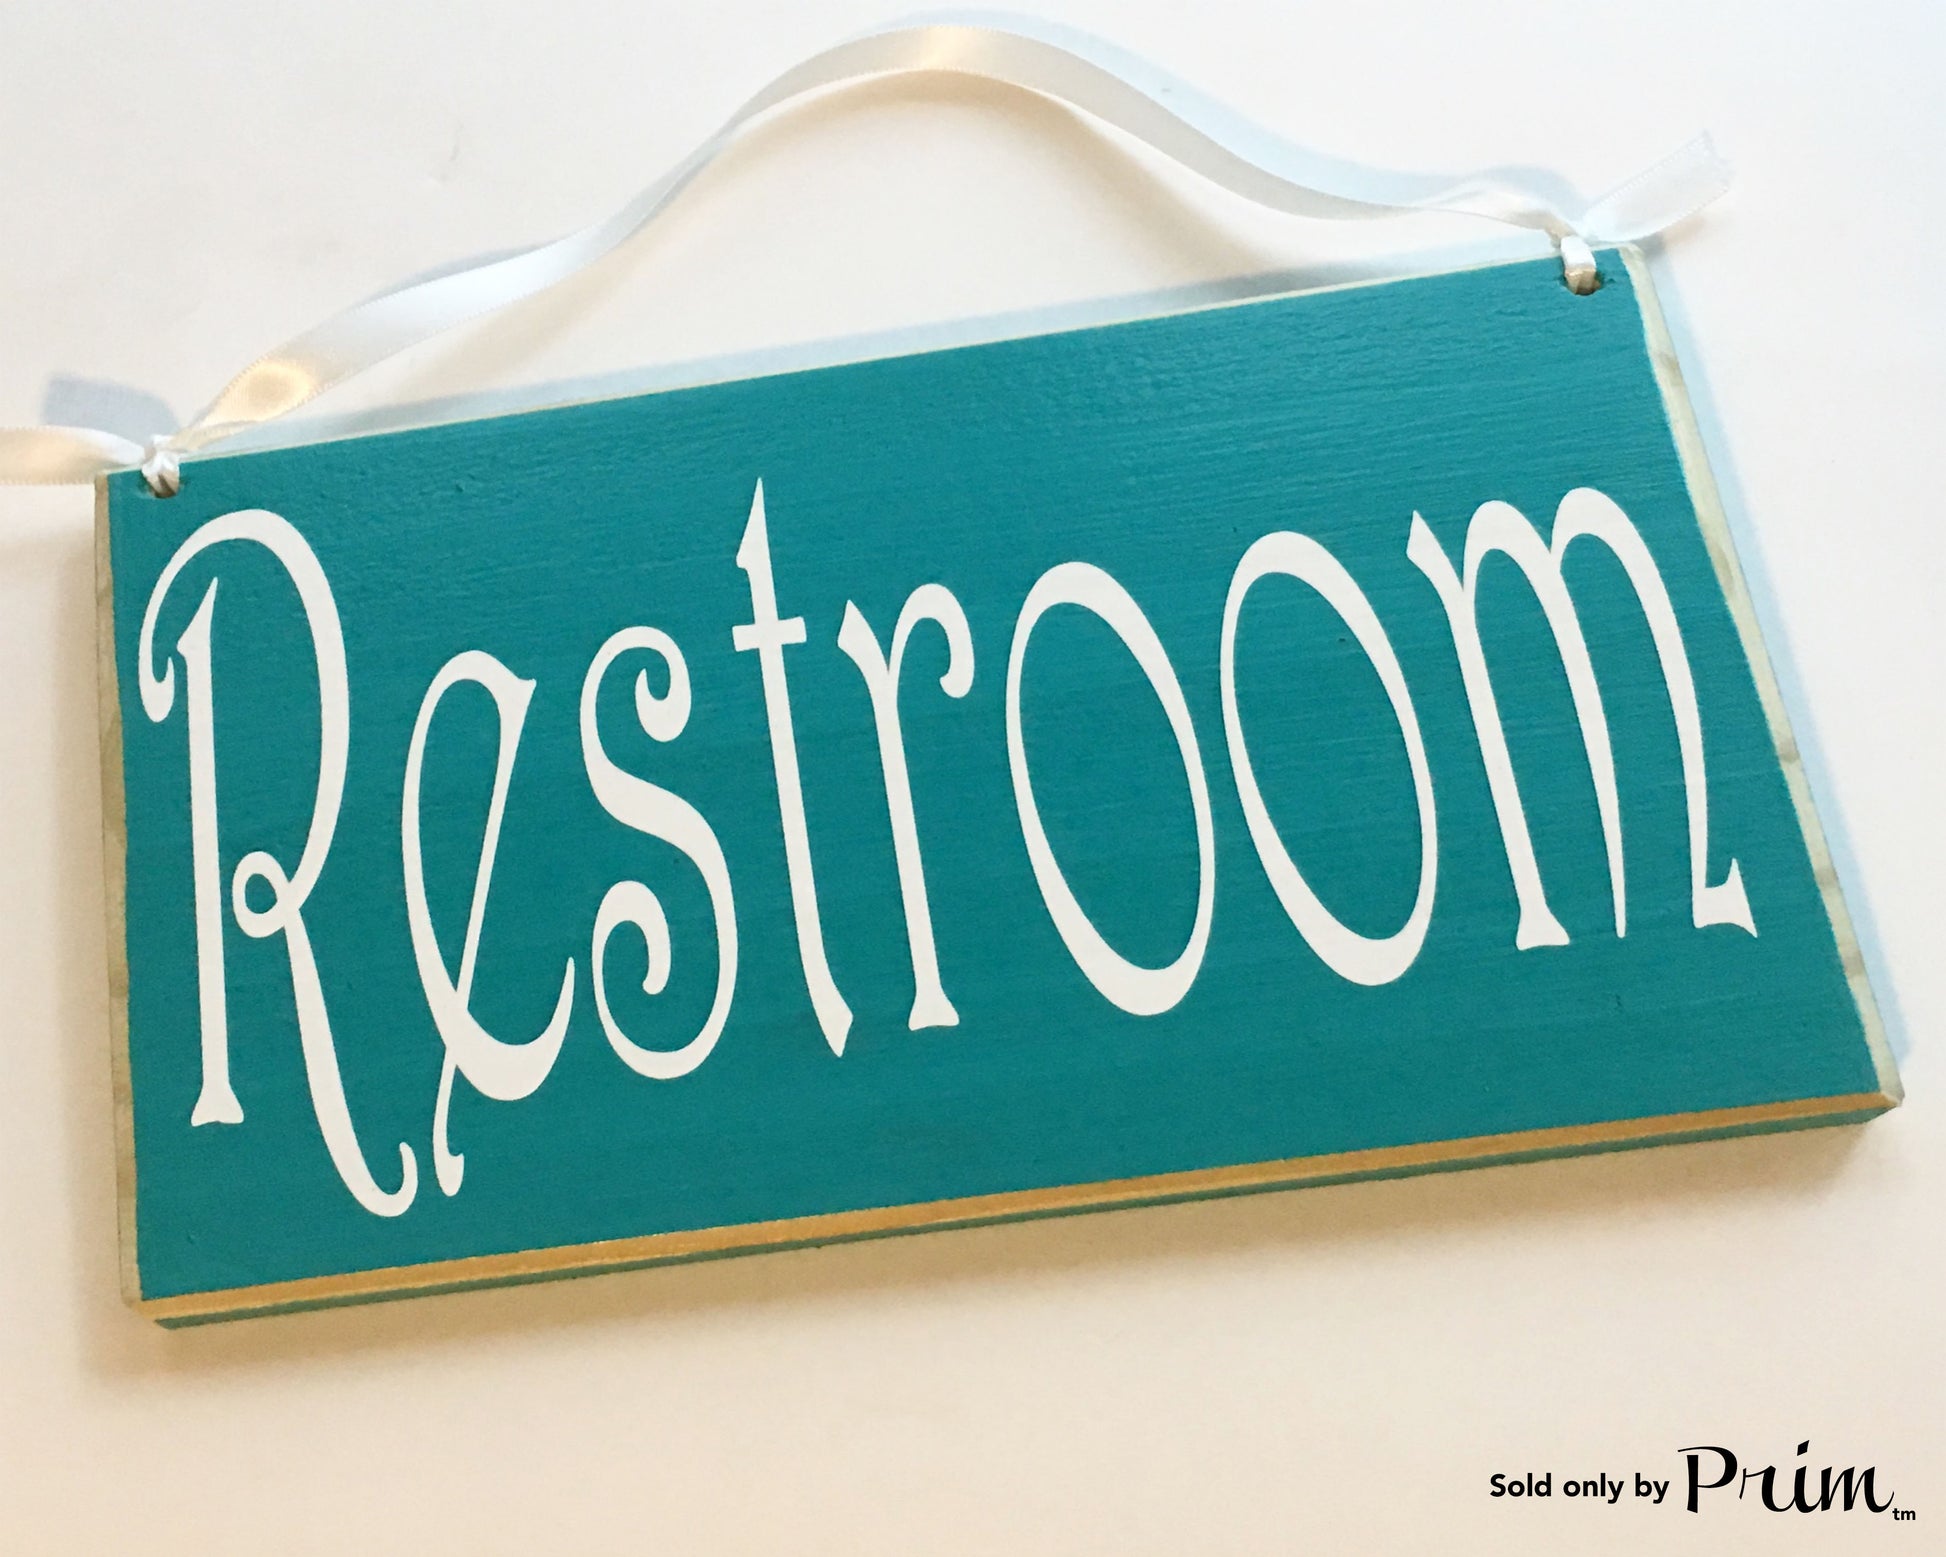 8x6 Restroom (Choose Color) Custom Bathroom Toilet Welcome WC Loo Wood Sign Plaque